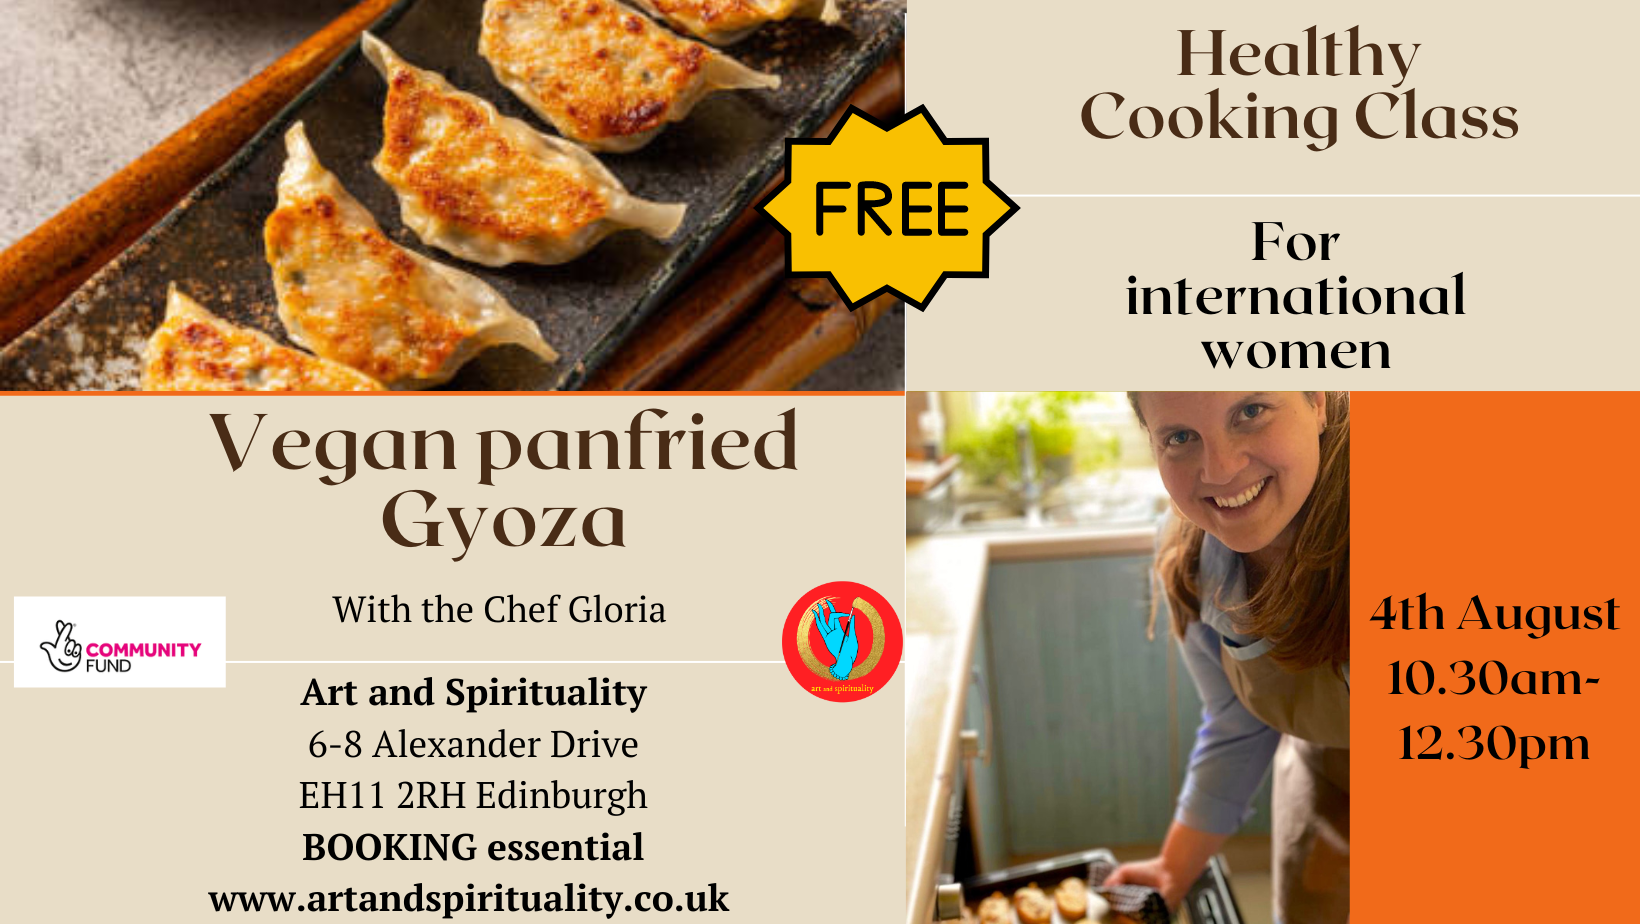 4th August FREE COOKING CLASS: vegan panfried gyoza